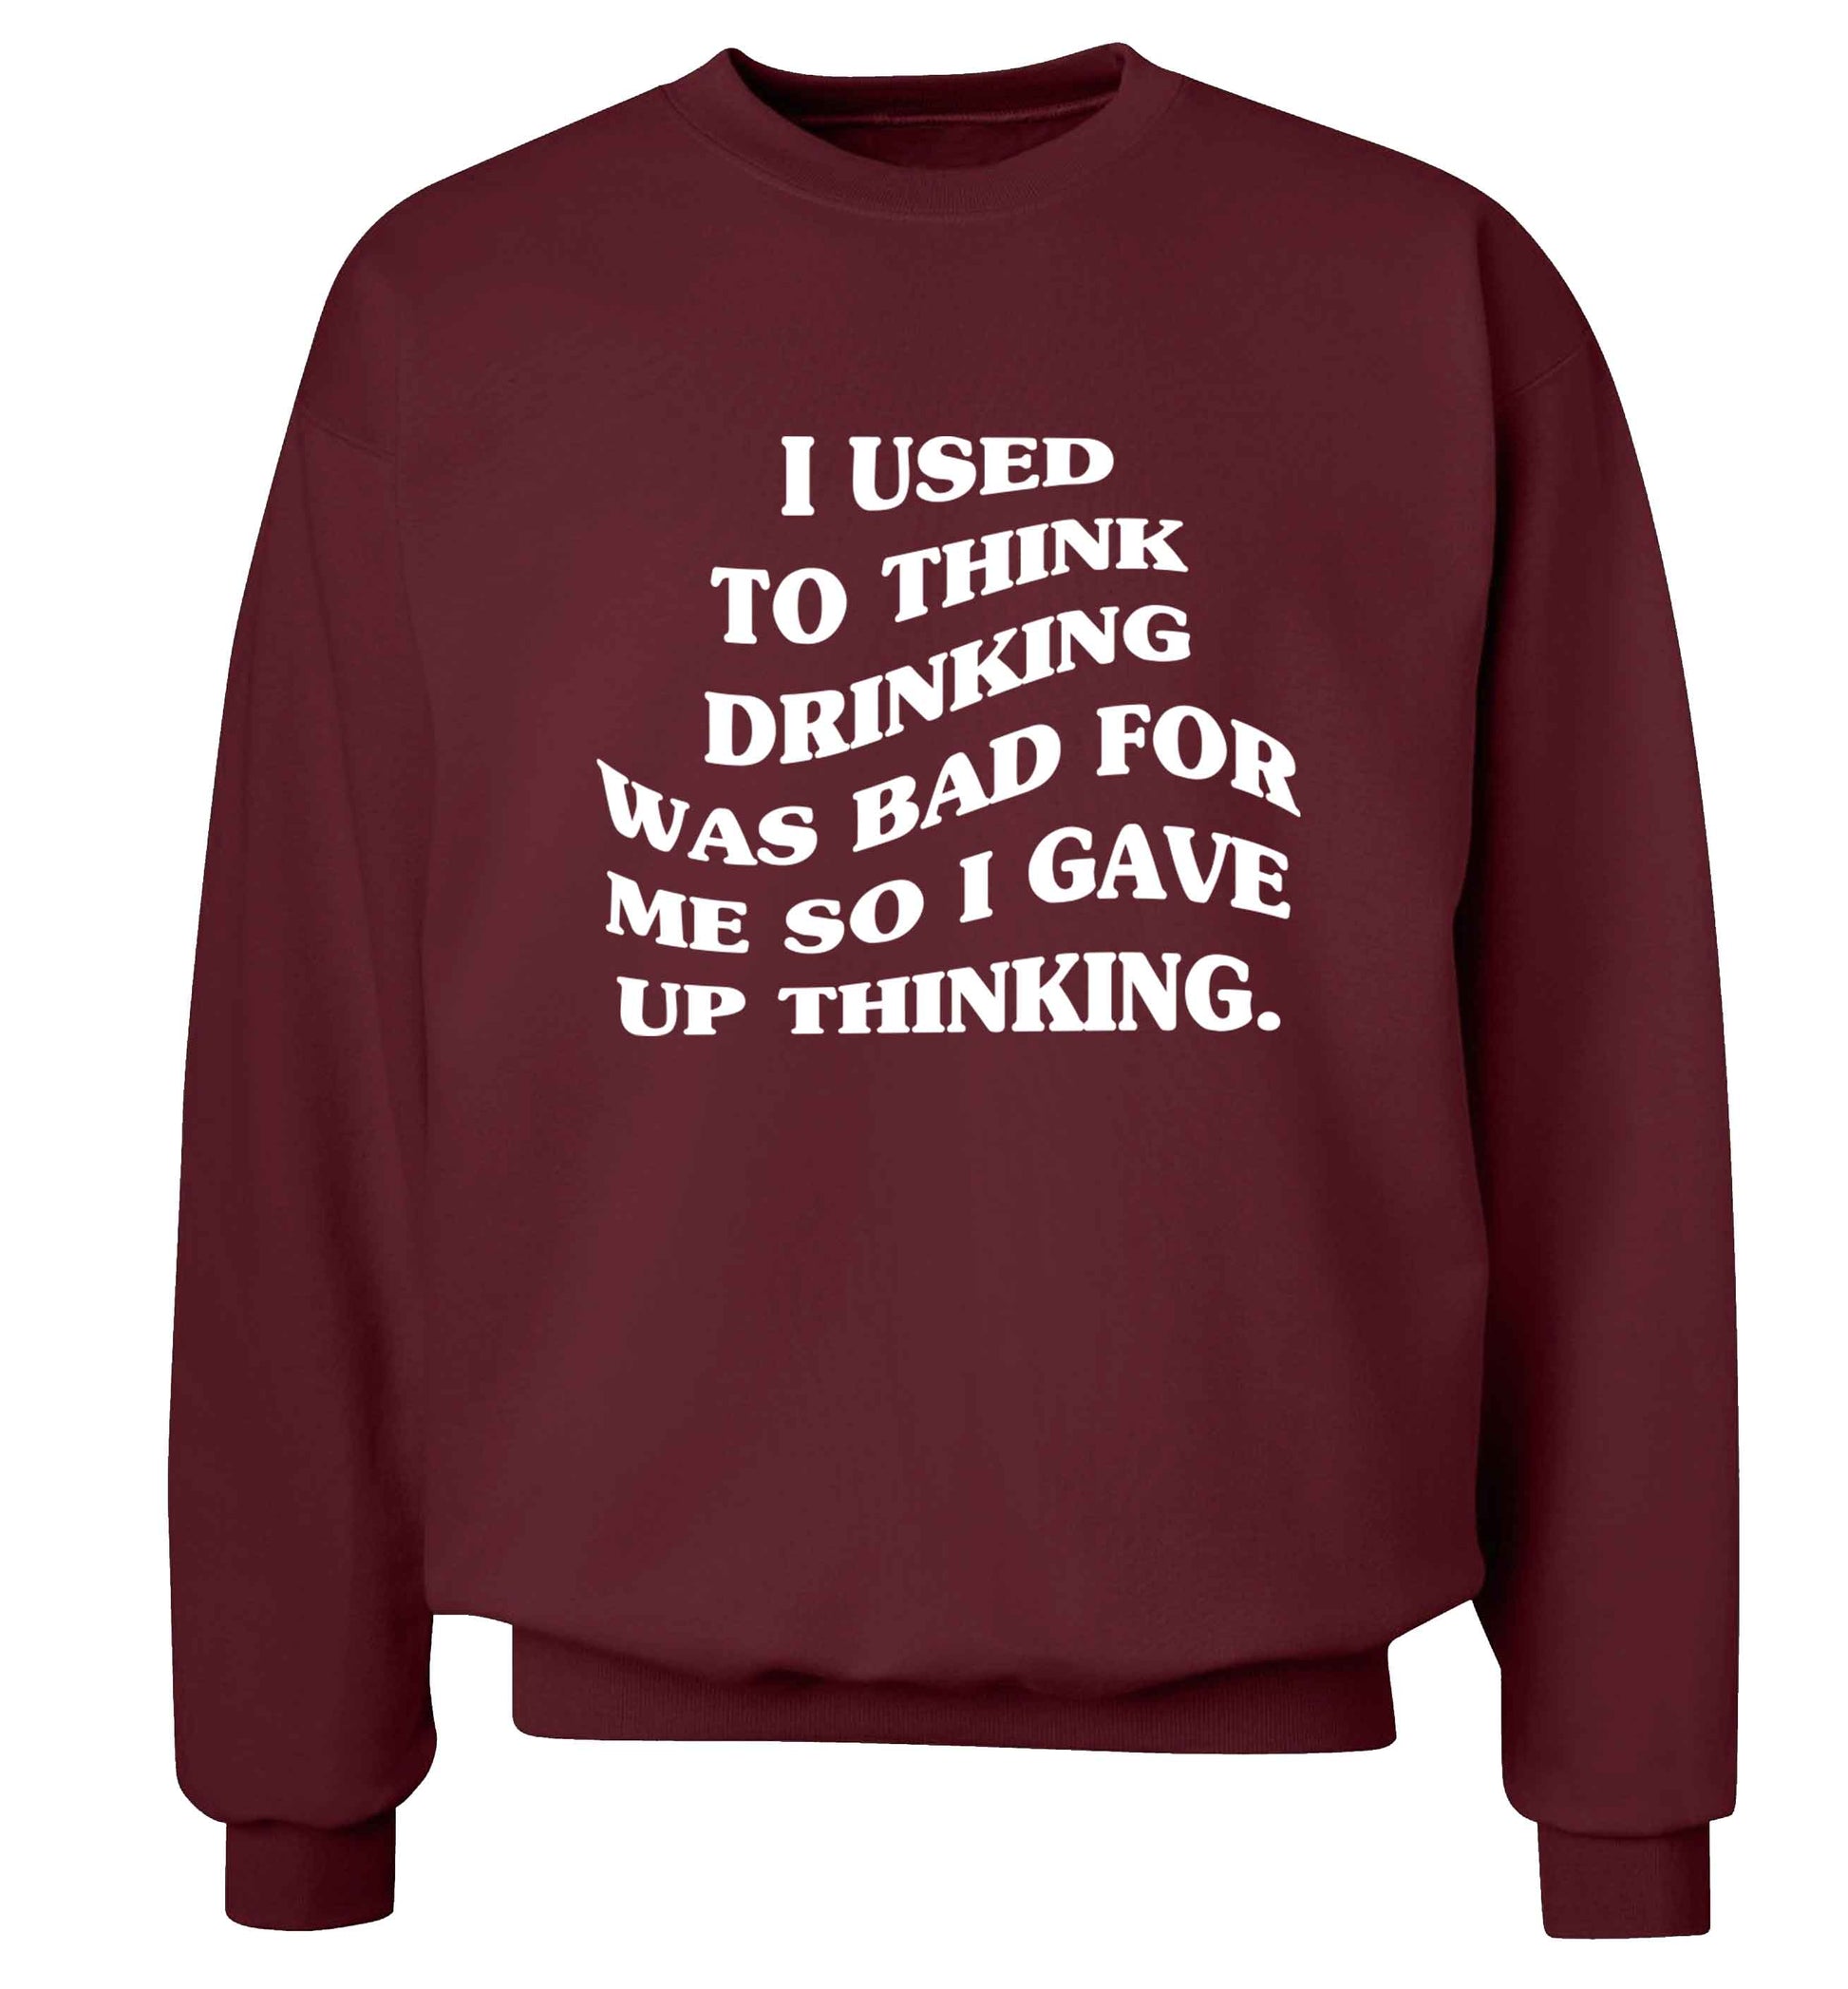 I used to think drinking was bad so I gave up thinking Adult's unisex maroon Sweater 2XL